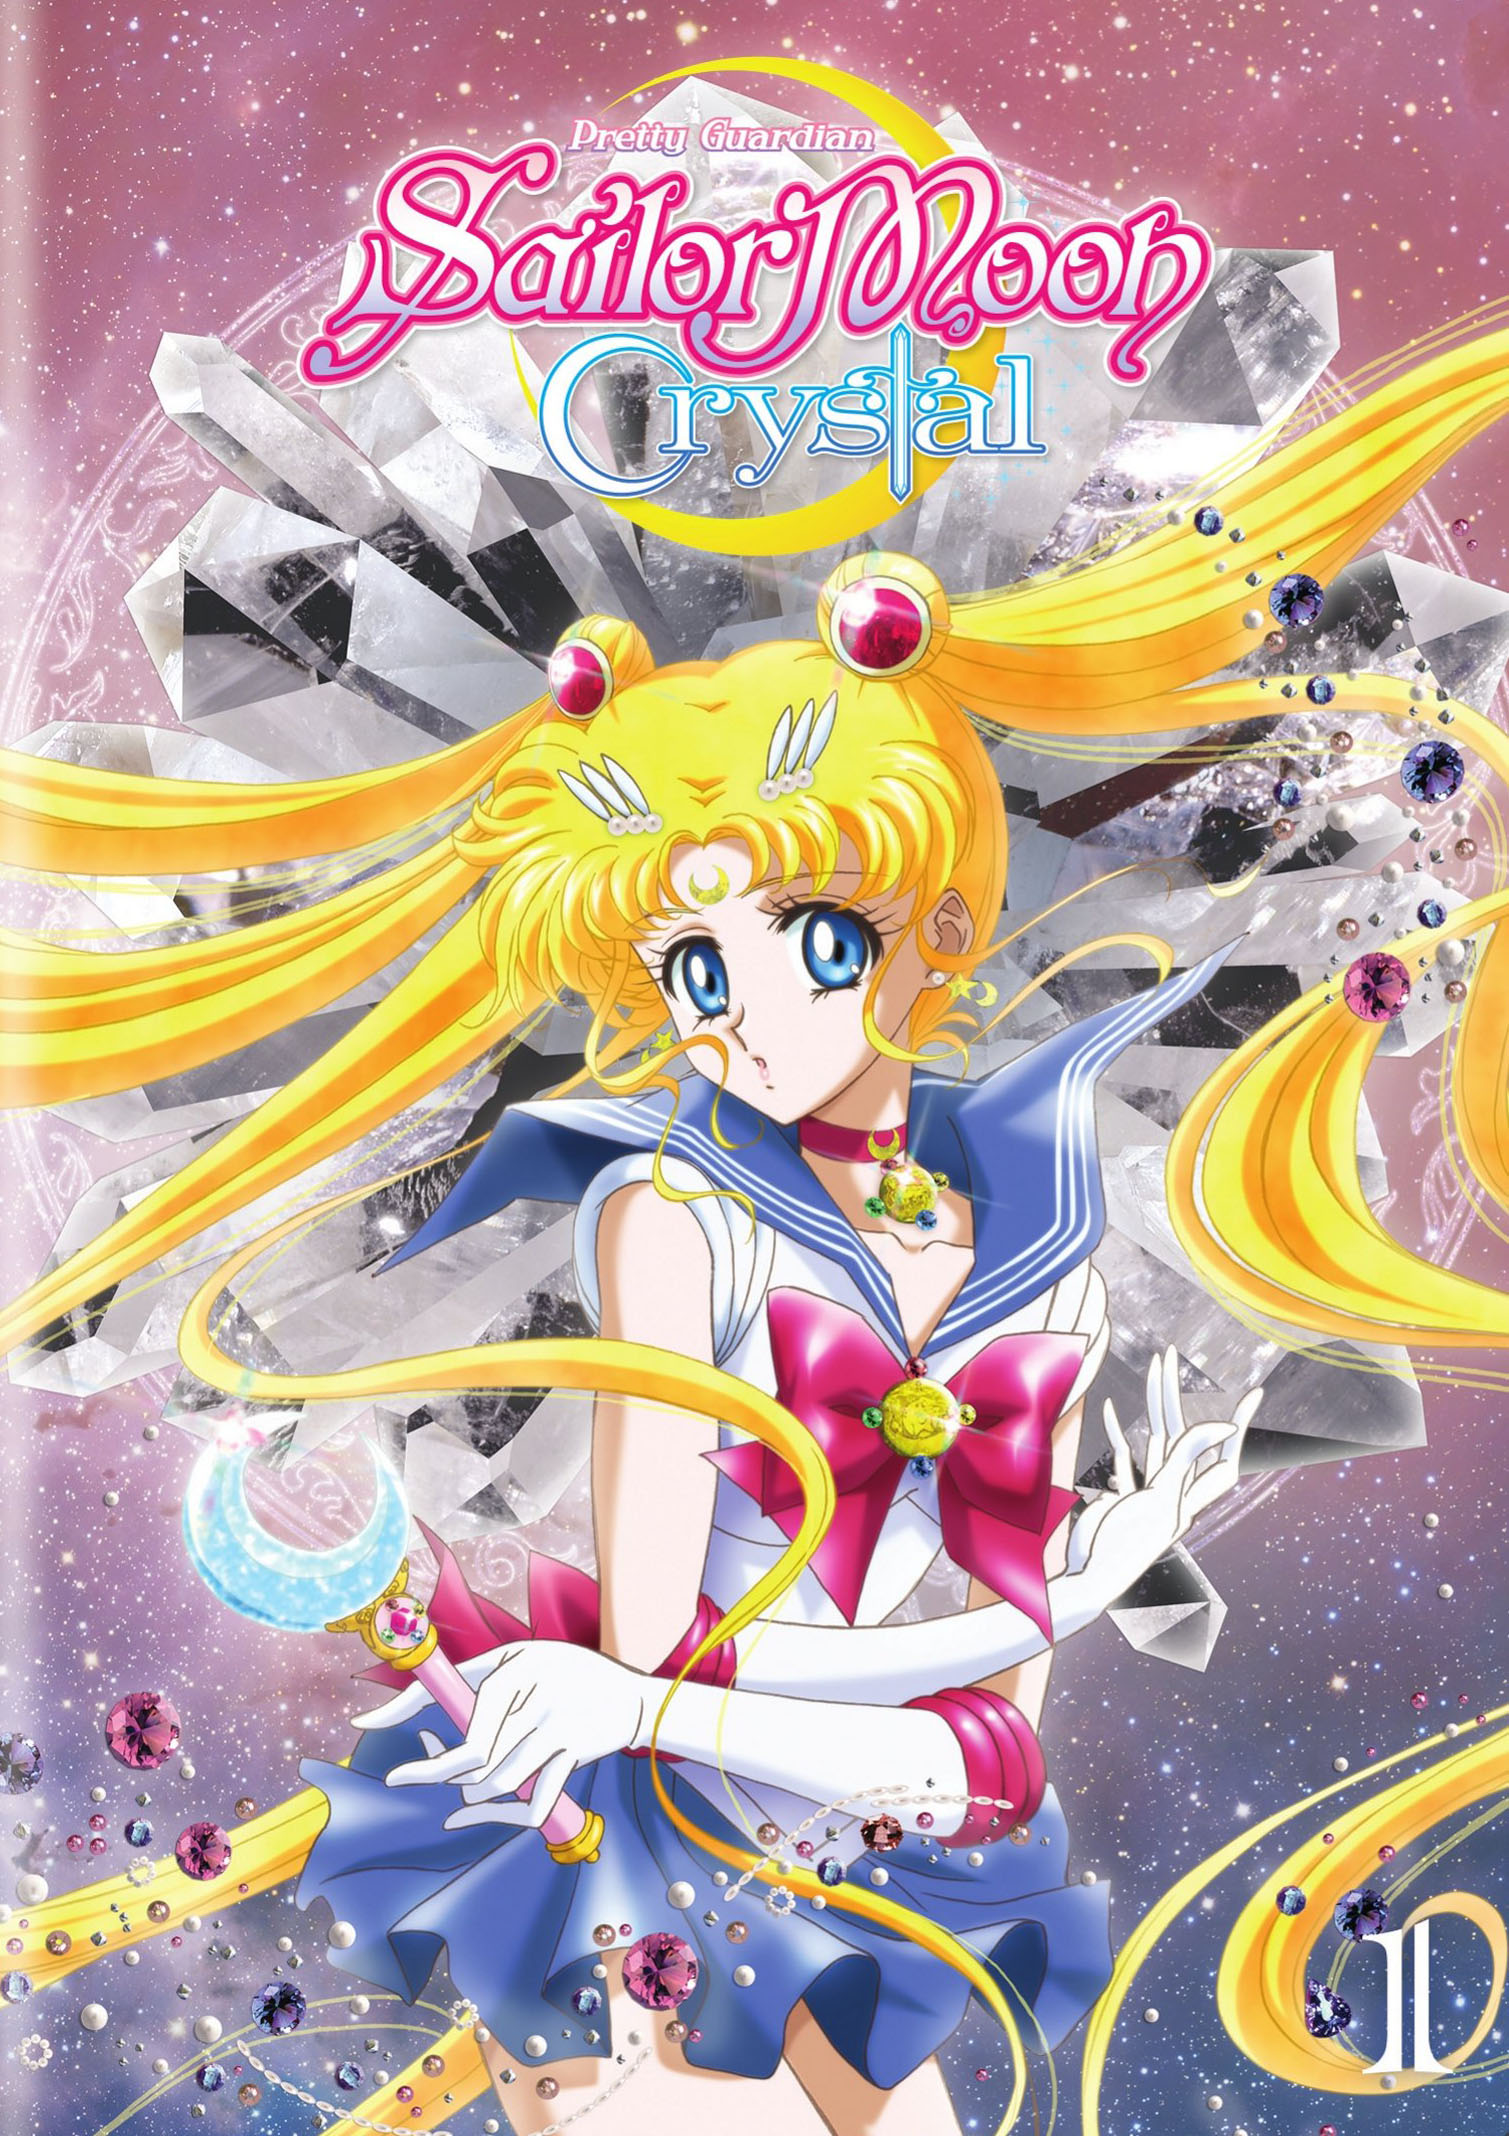 Sailor Moon Crystal Set 3 Limited Edition Blu-ray/DVD